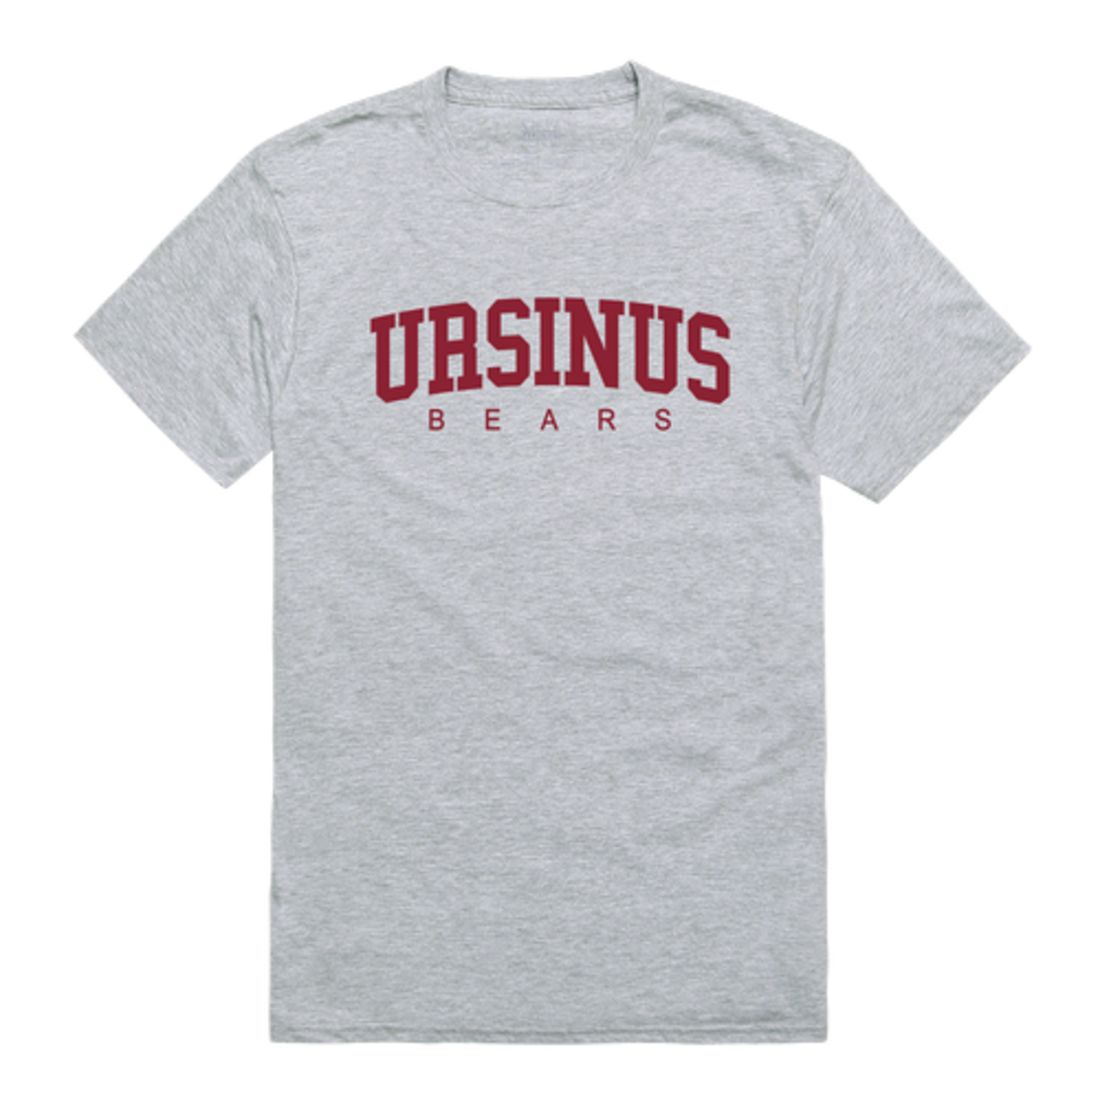 Ursinus College Bears Game Day T-Shirt